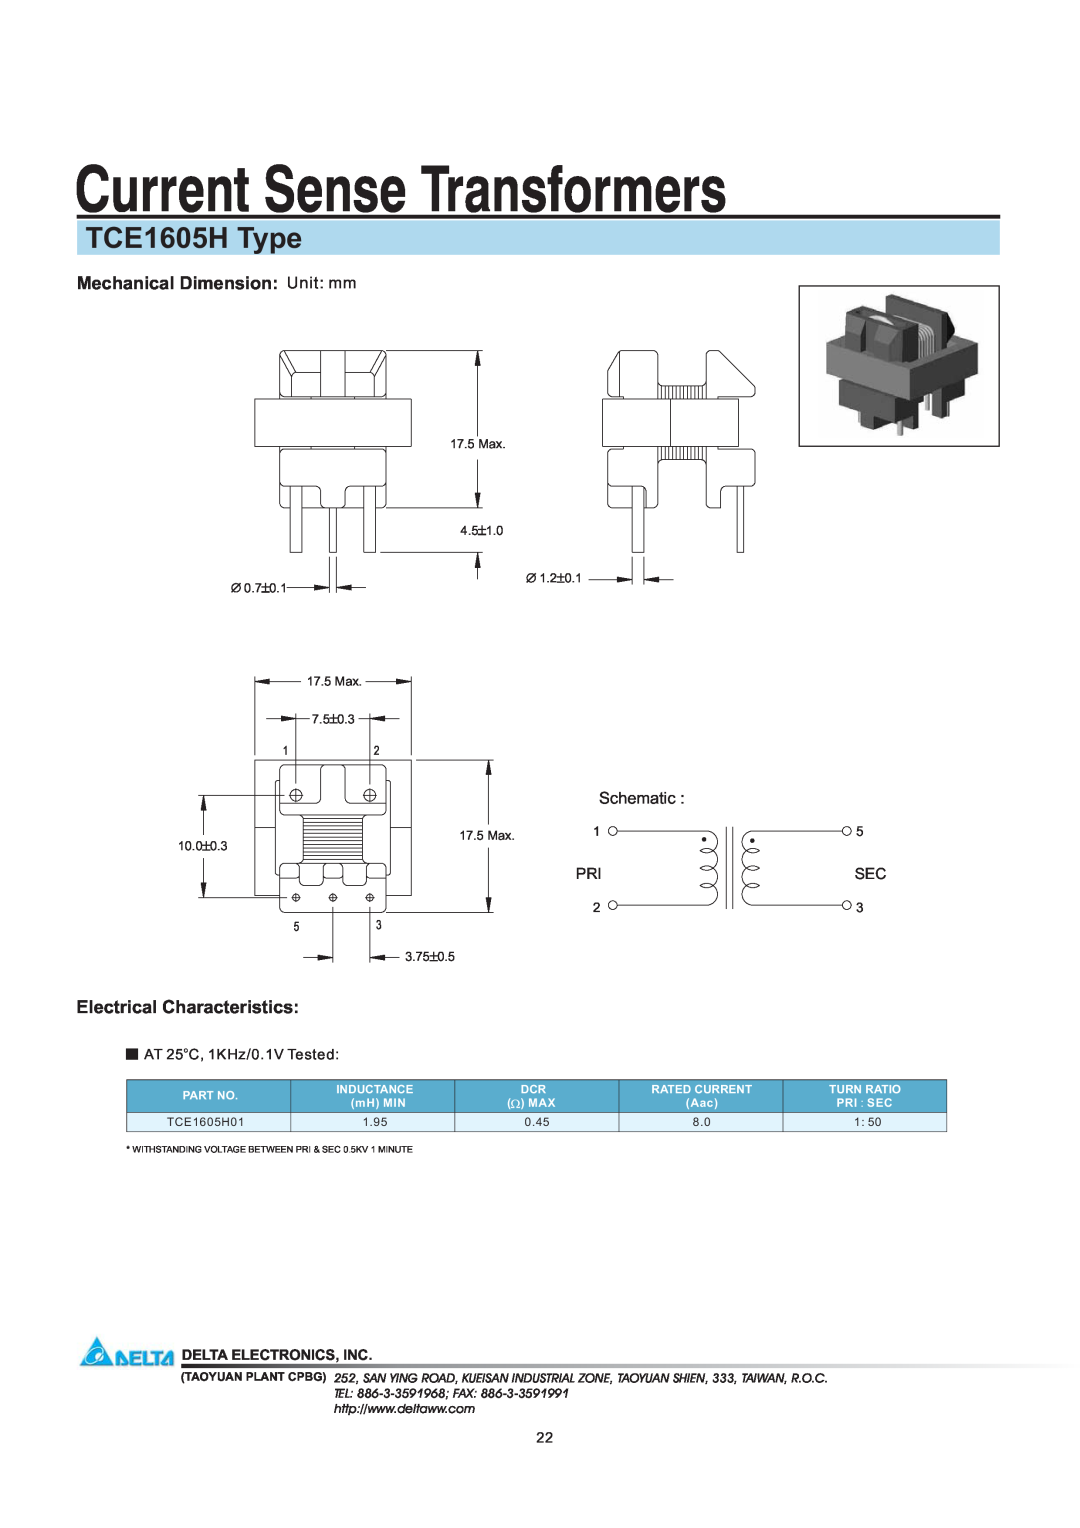 Delta Electronics manual Current Sense Transformers, TCE1605H Type, Mechanical Dimension Unit mm, Schematic, Max 4.51.0 